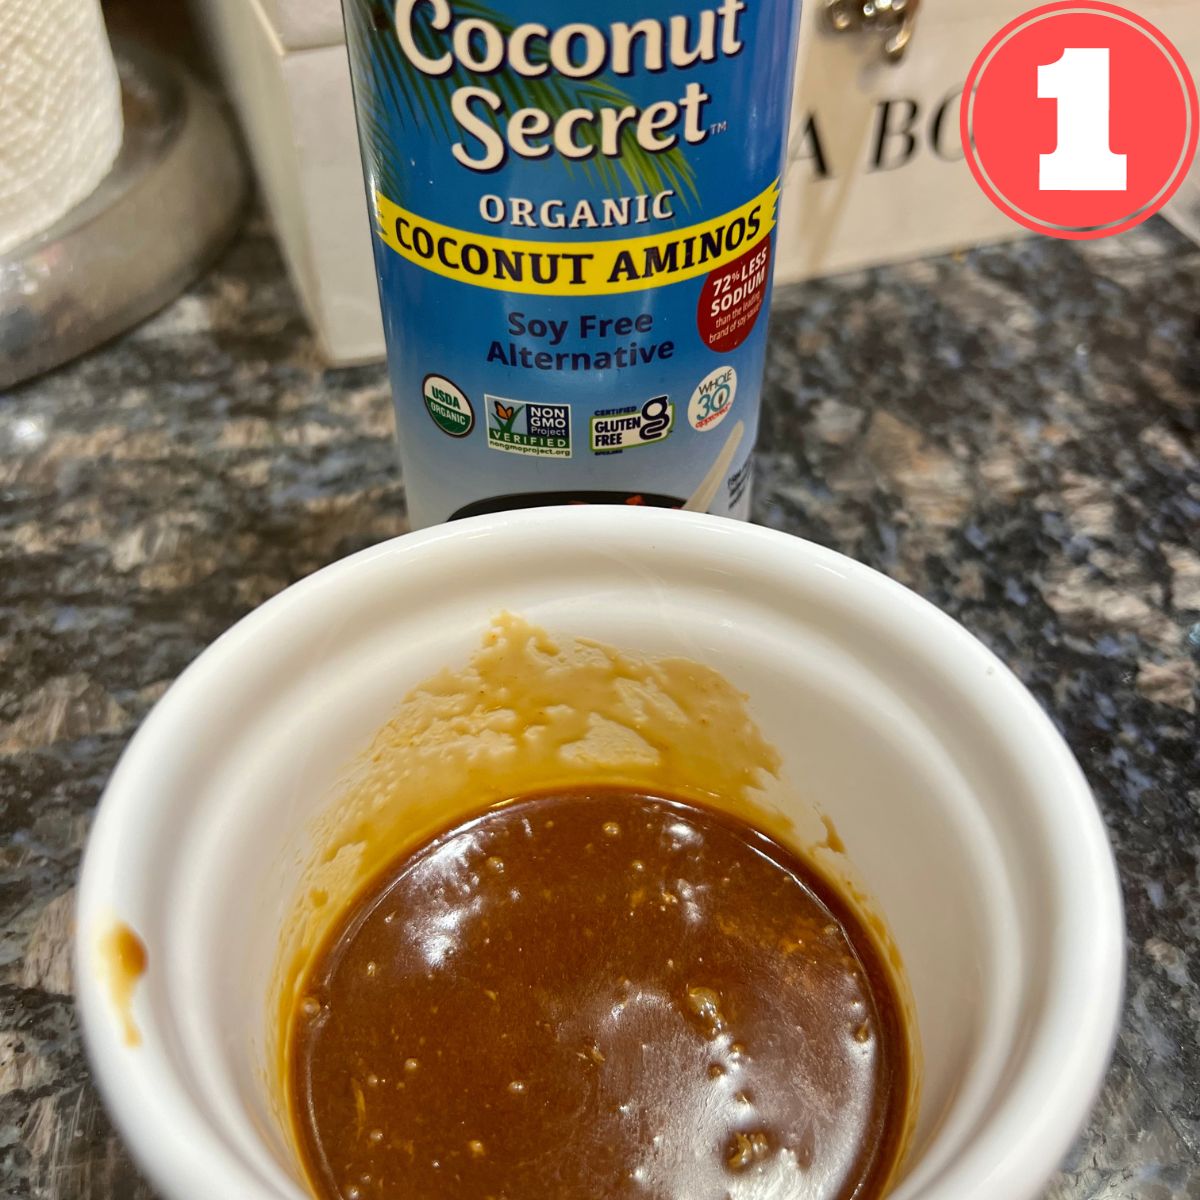 Coconut amino hot sauce in a small white bowl